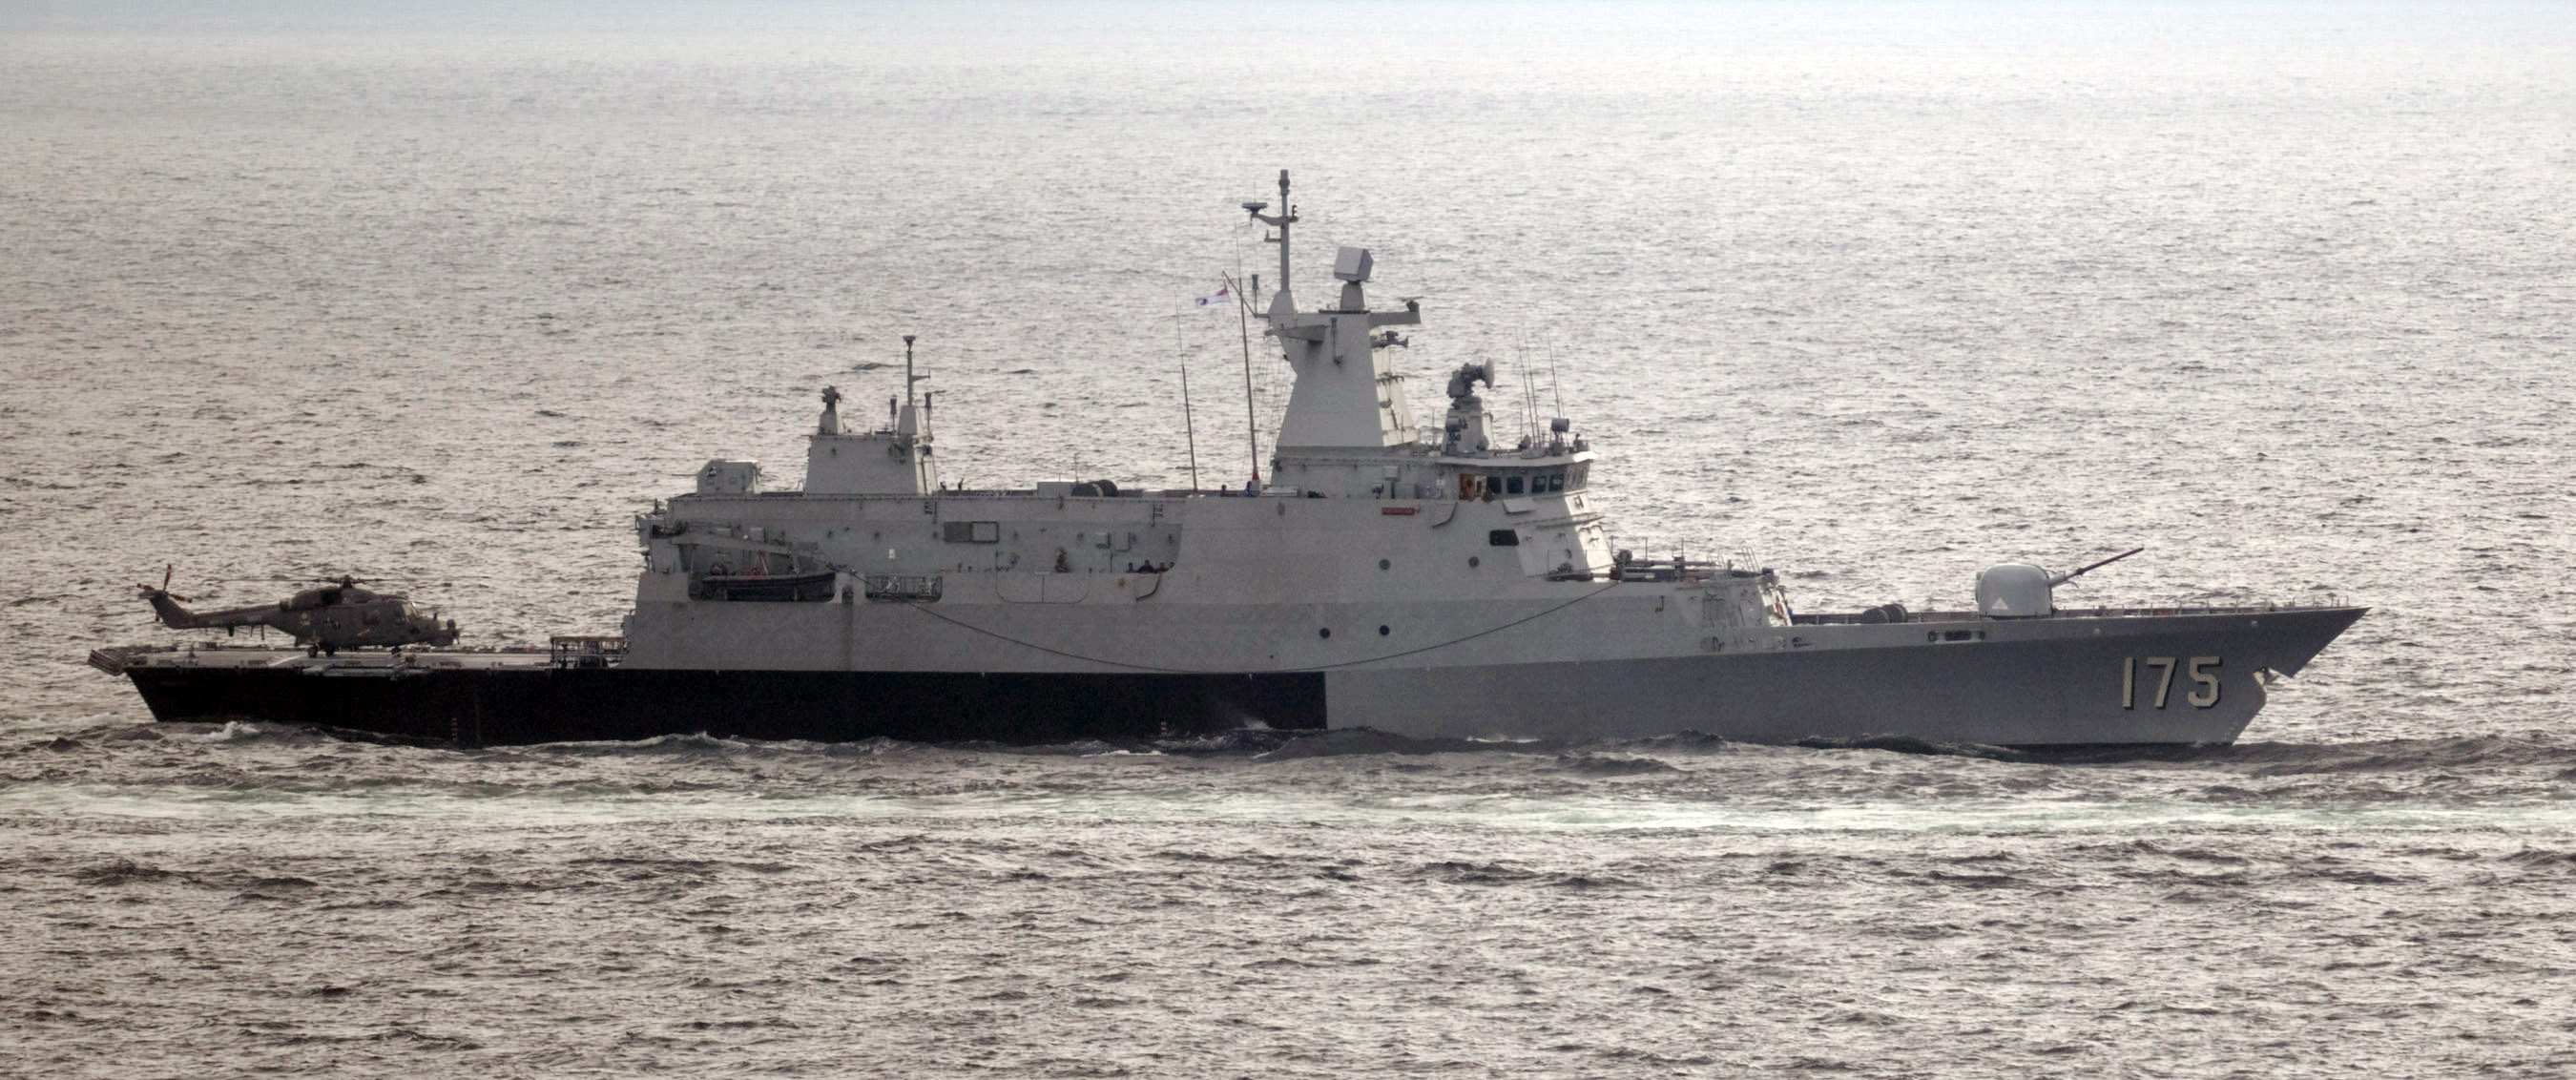 US_Navy_110126-N-6320L-821_The_Royal_Malaysian_Navy_corvette_KD_Kelantan_%28175%29_is_underway_in_the_Strait_of_Malacca.jpg